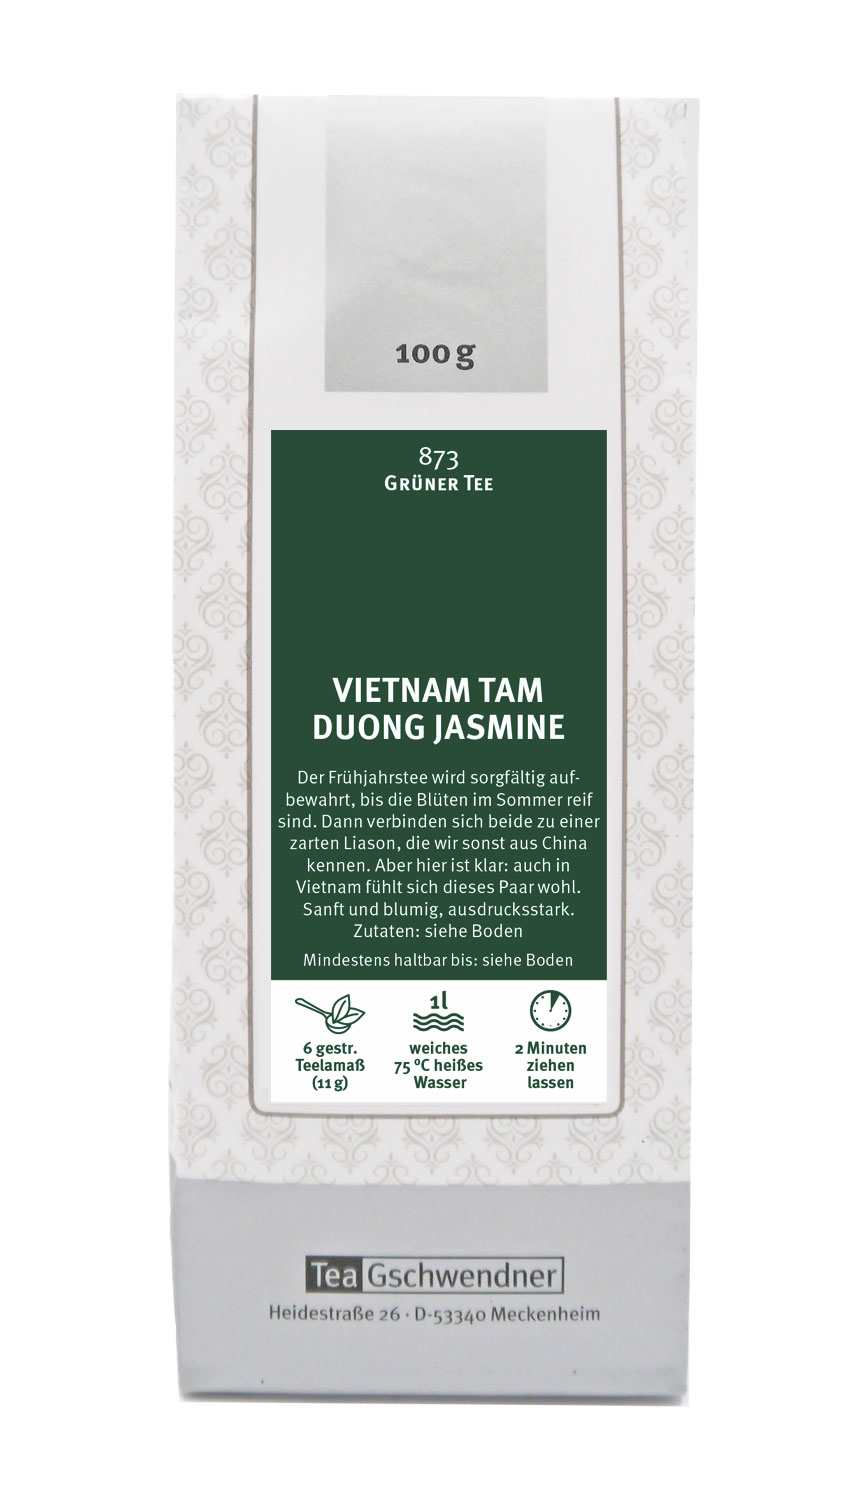 Vietnam Tam Duong Jasmine